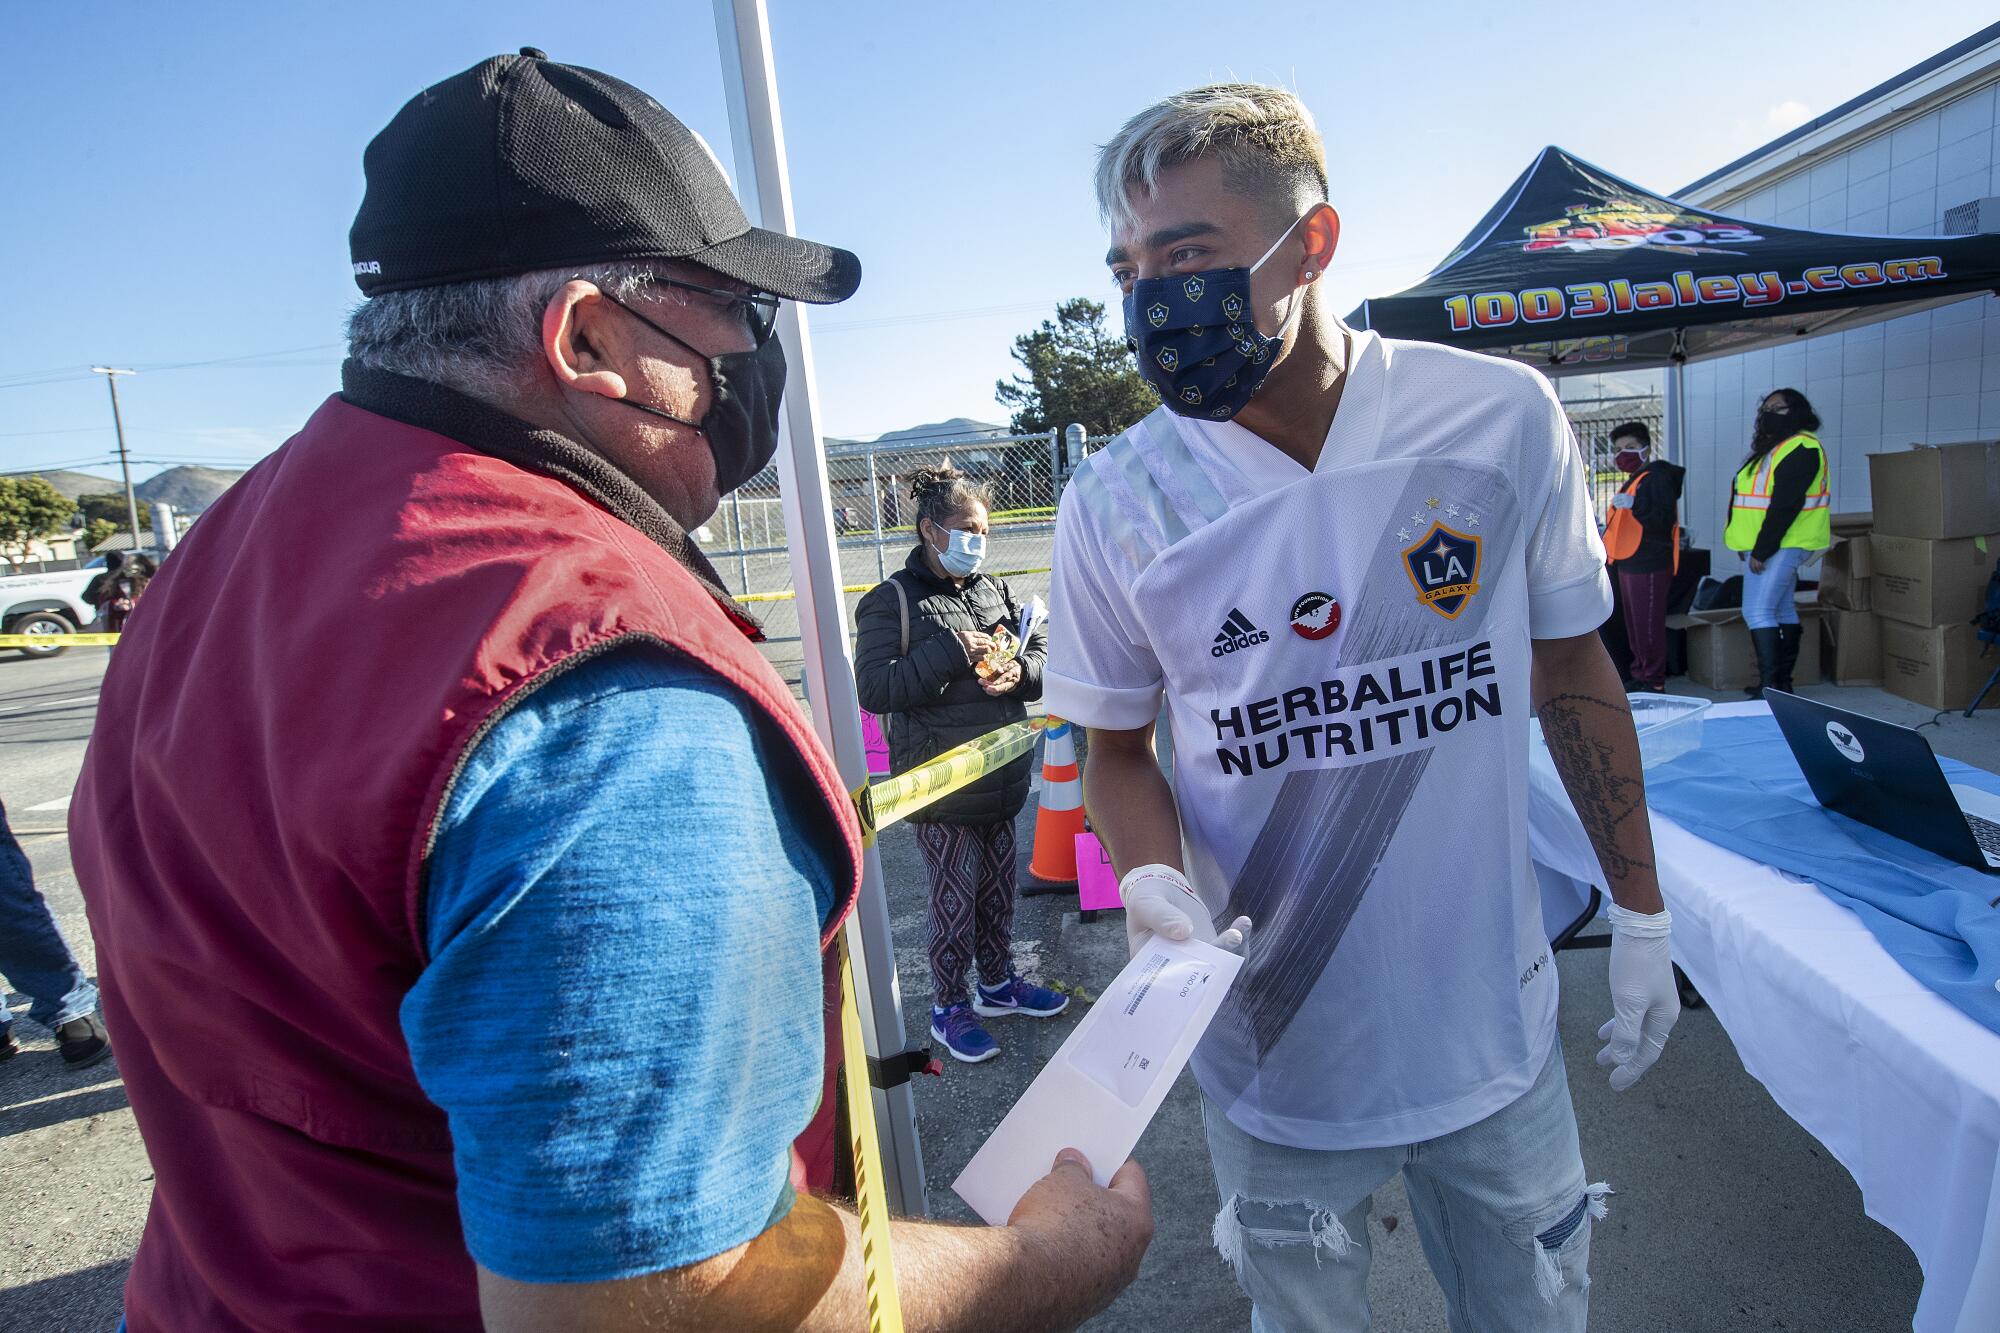 Antonio Tamayo receives an envelope containing a $100 prepaid card from Los Angeles Galaxy soccer player Julian Araujo.